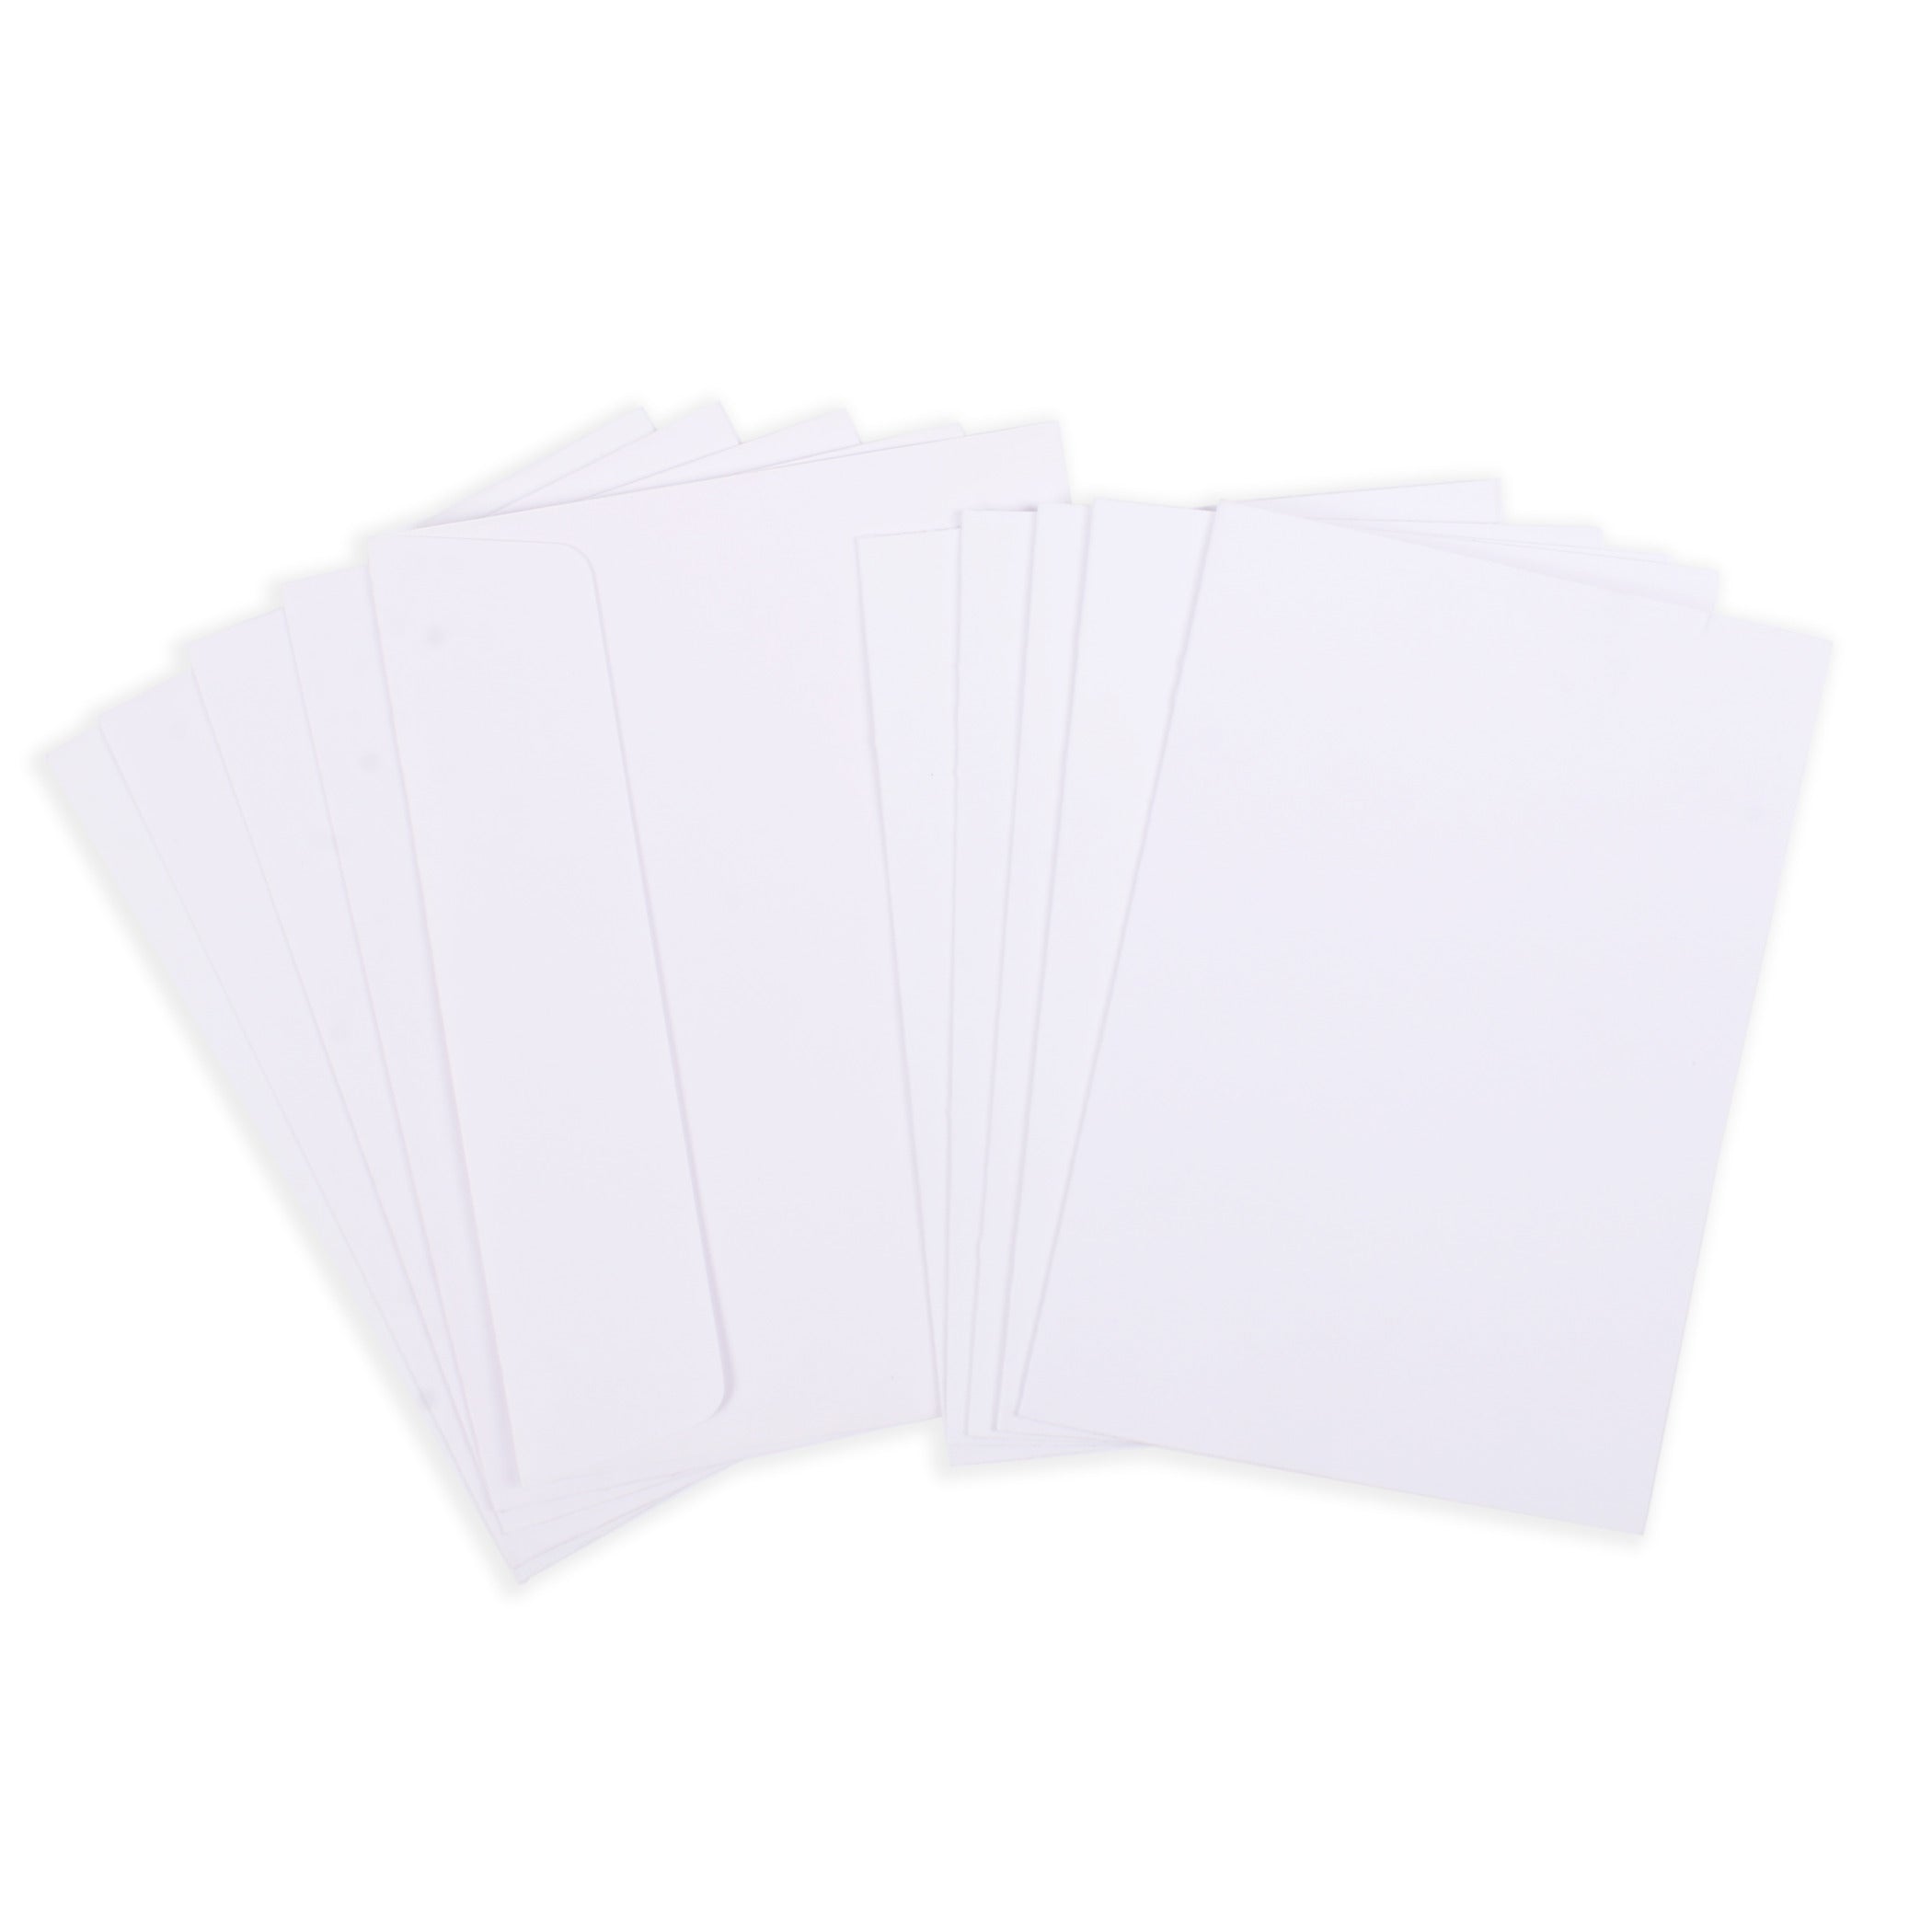 5 Cards & 5 Envelopes 4.21 X 5.90 Inches Ivory 10Pcs